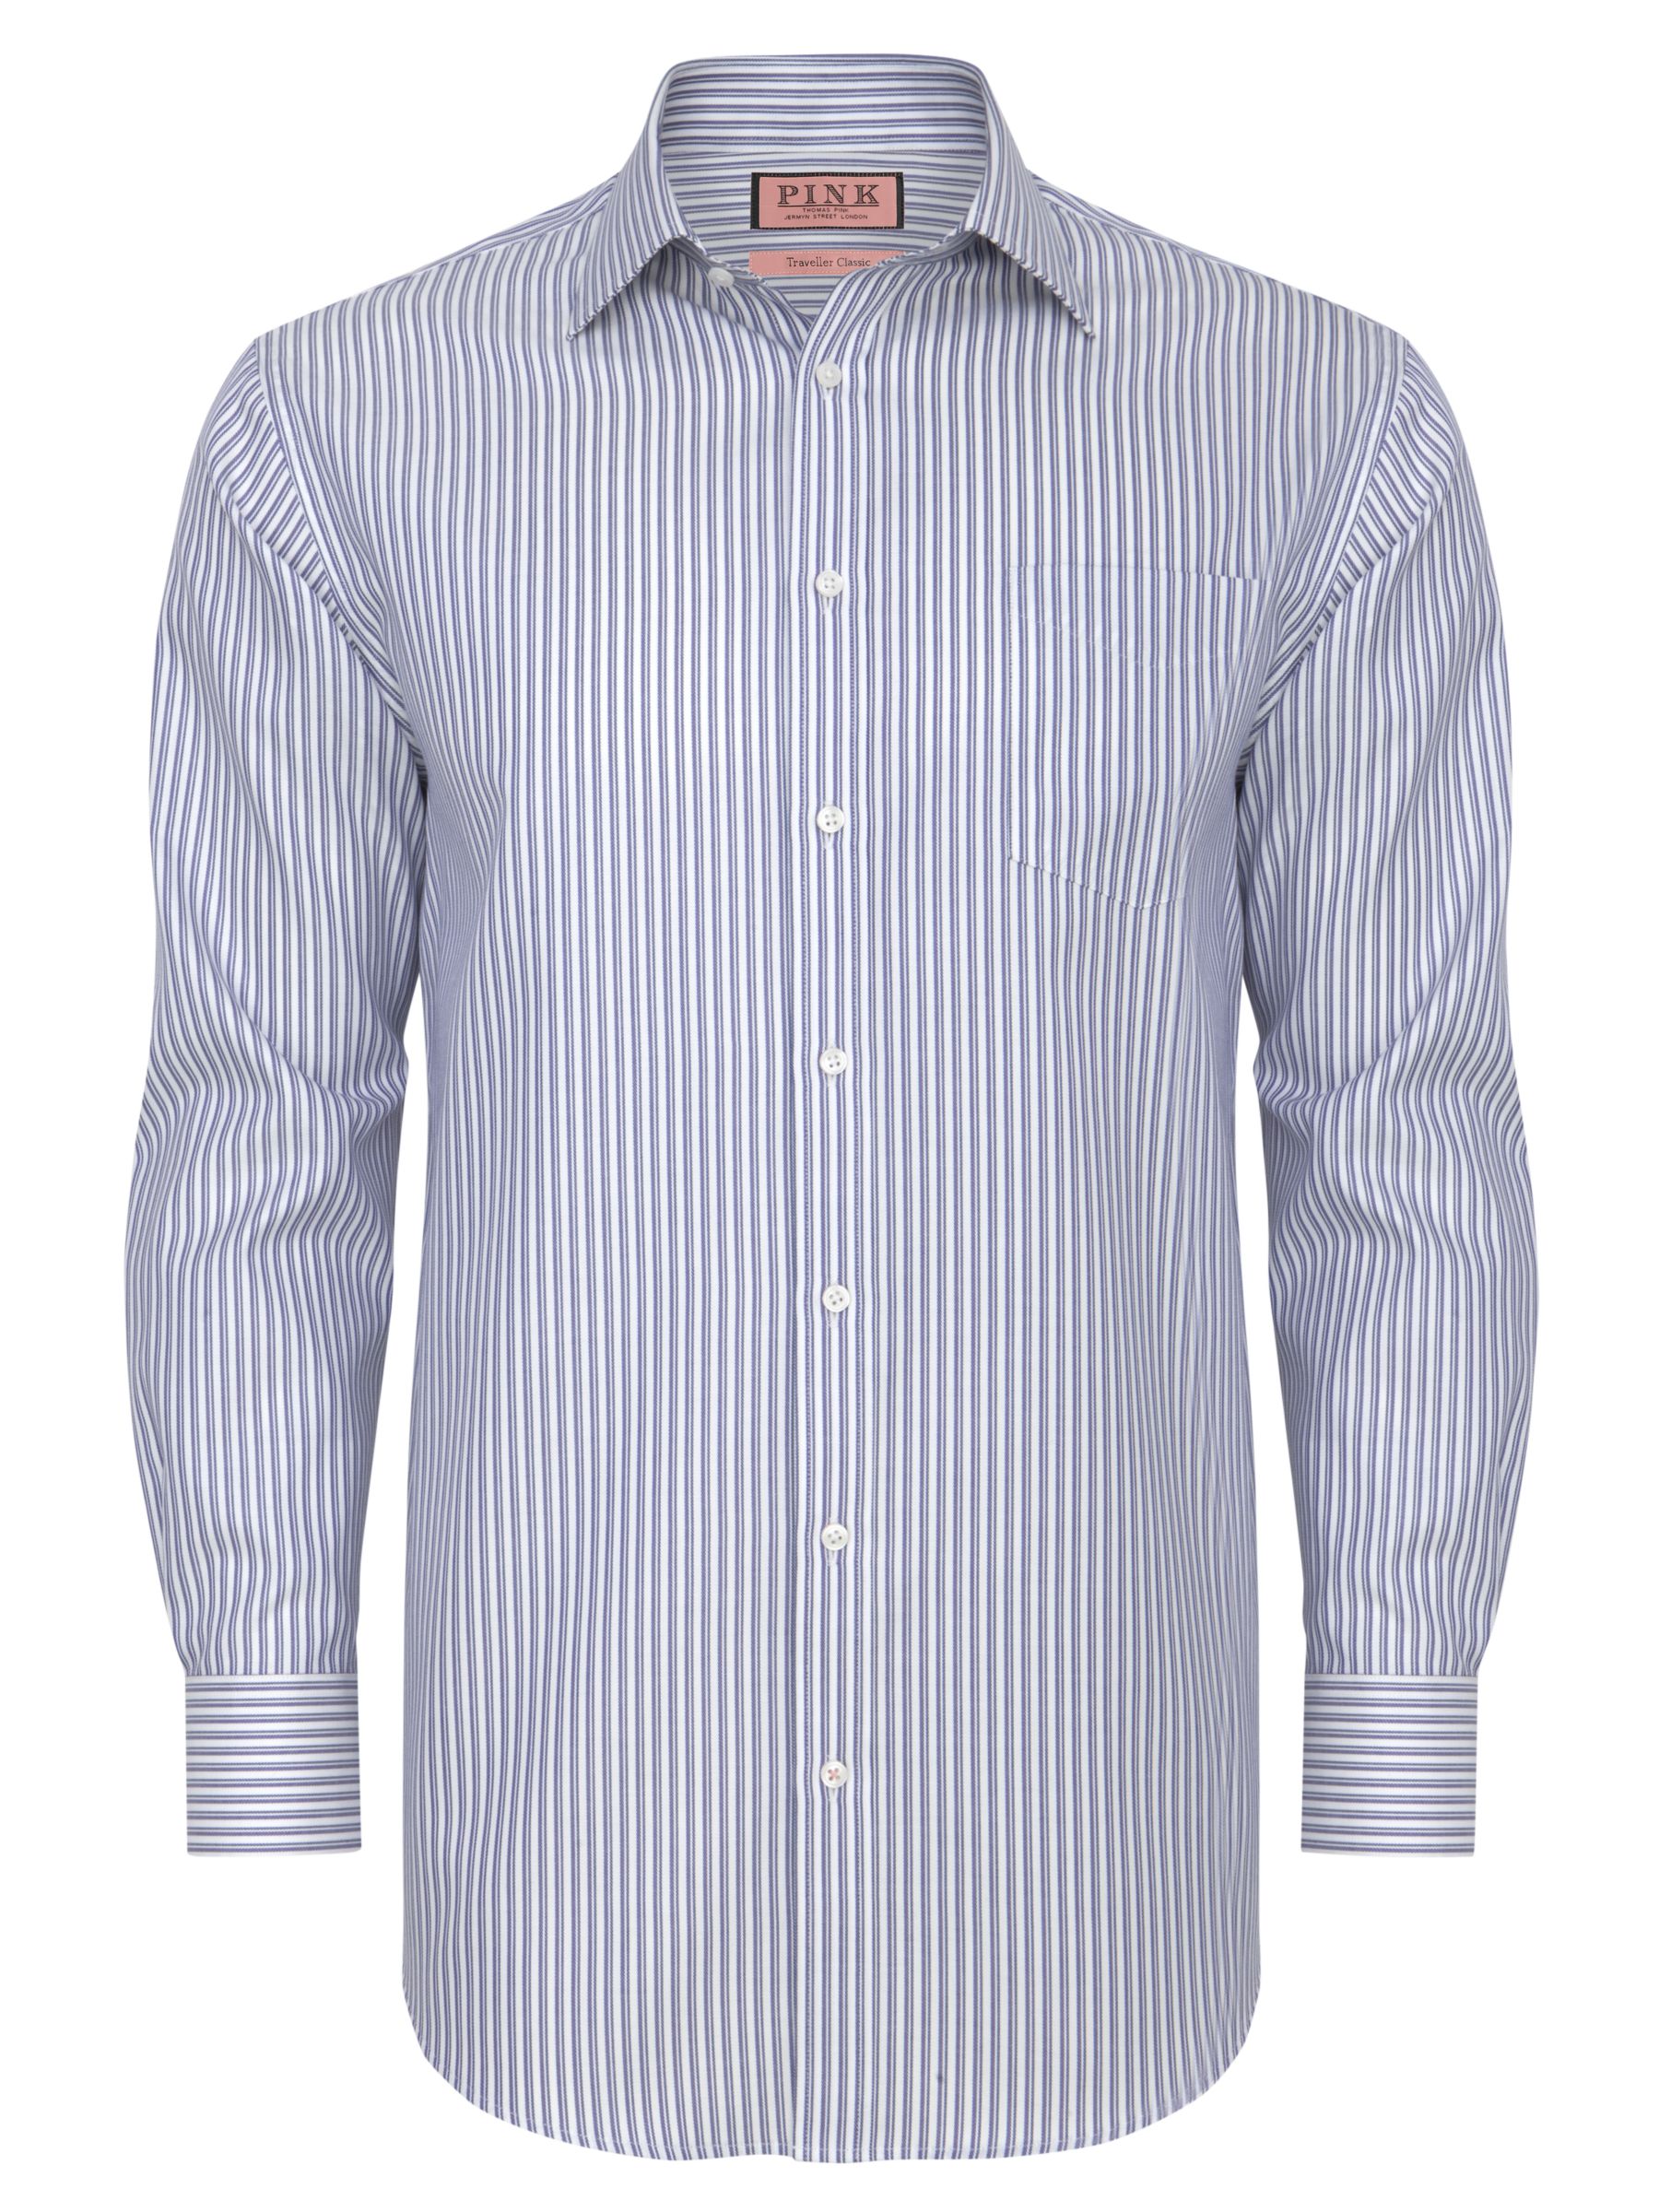 Thomas Pink Lammers 2-Fold Cotton Stripe Shirt, Purple/White, 16.5